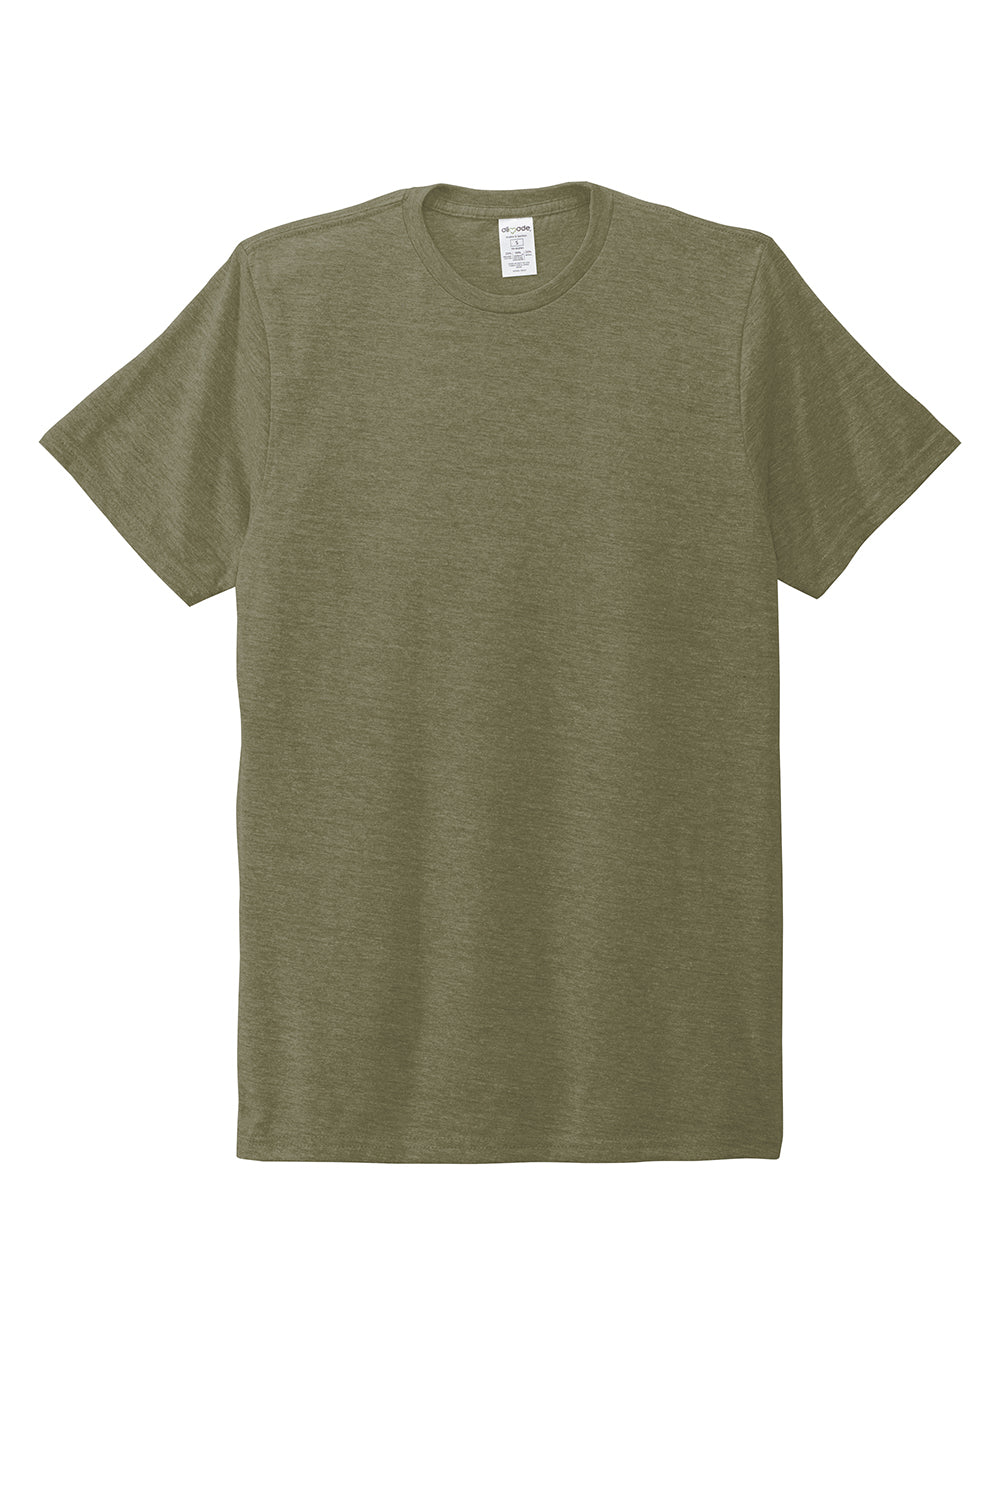 Allmade AL2004 Mens Short Sleeve Crewneck T-Shirt Olive You Green Flat Front